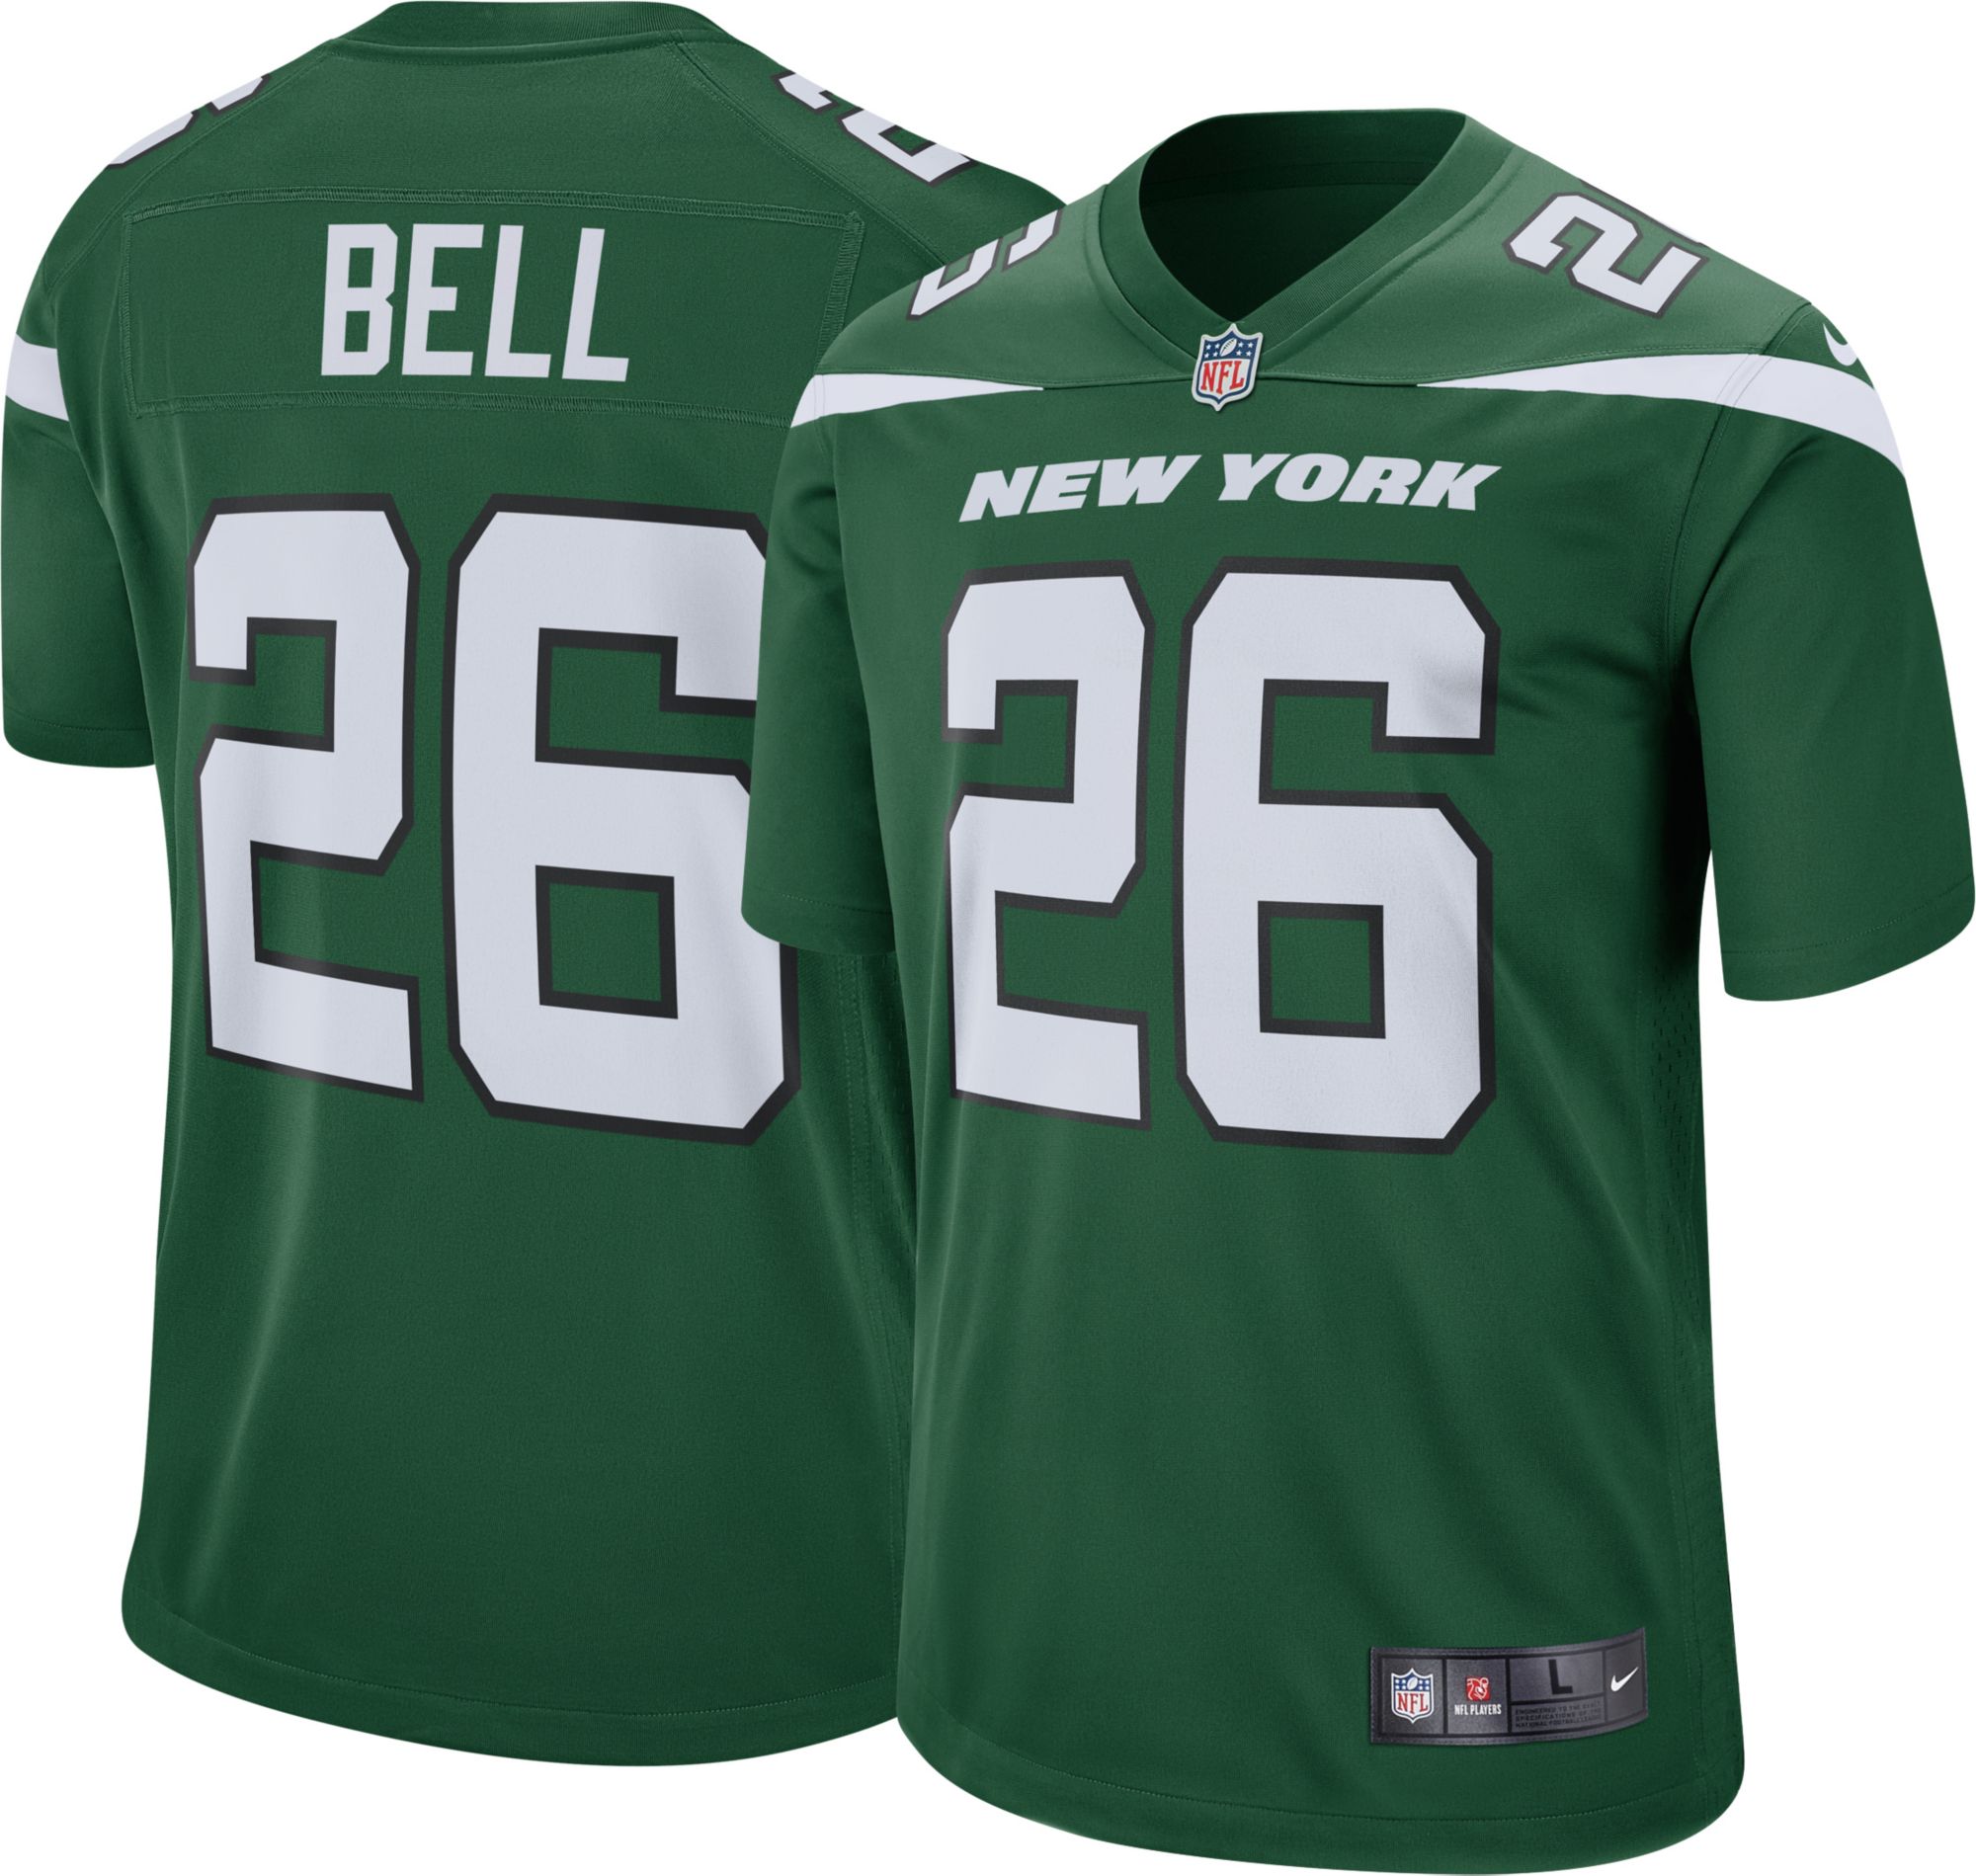 2019 new york jets jersey